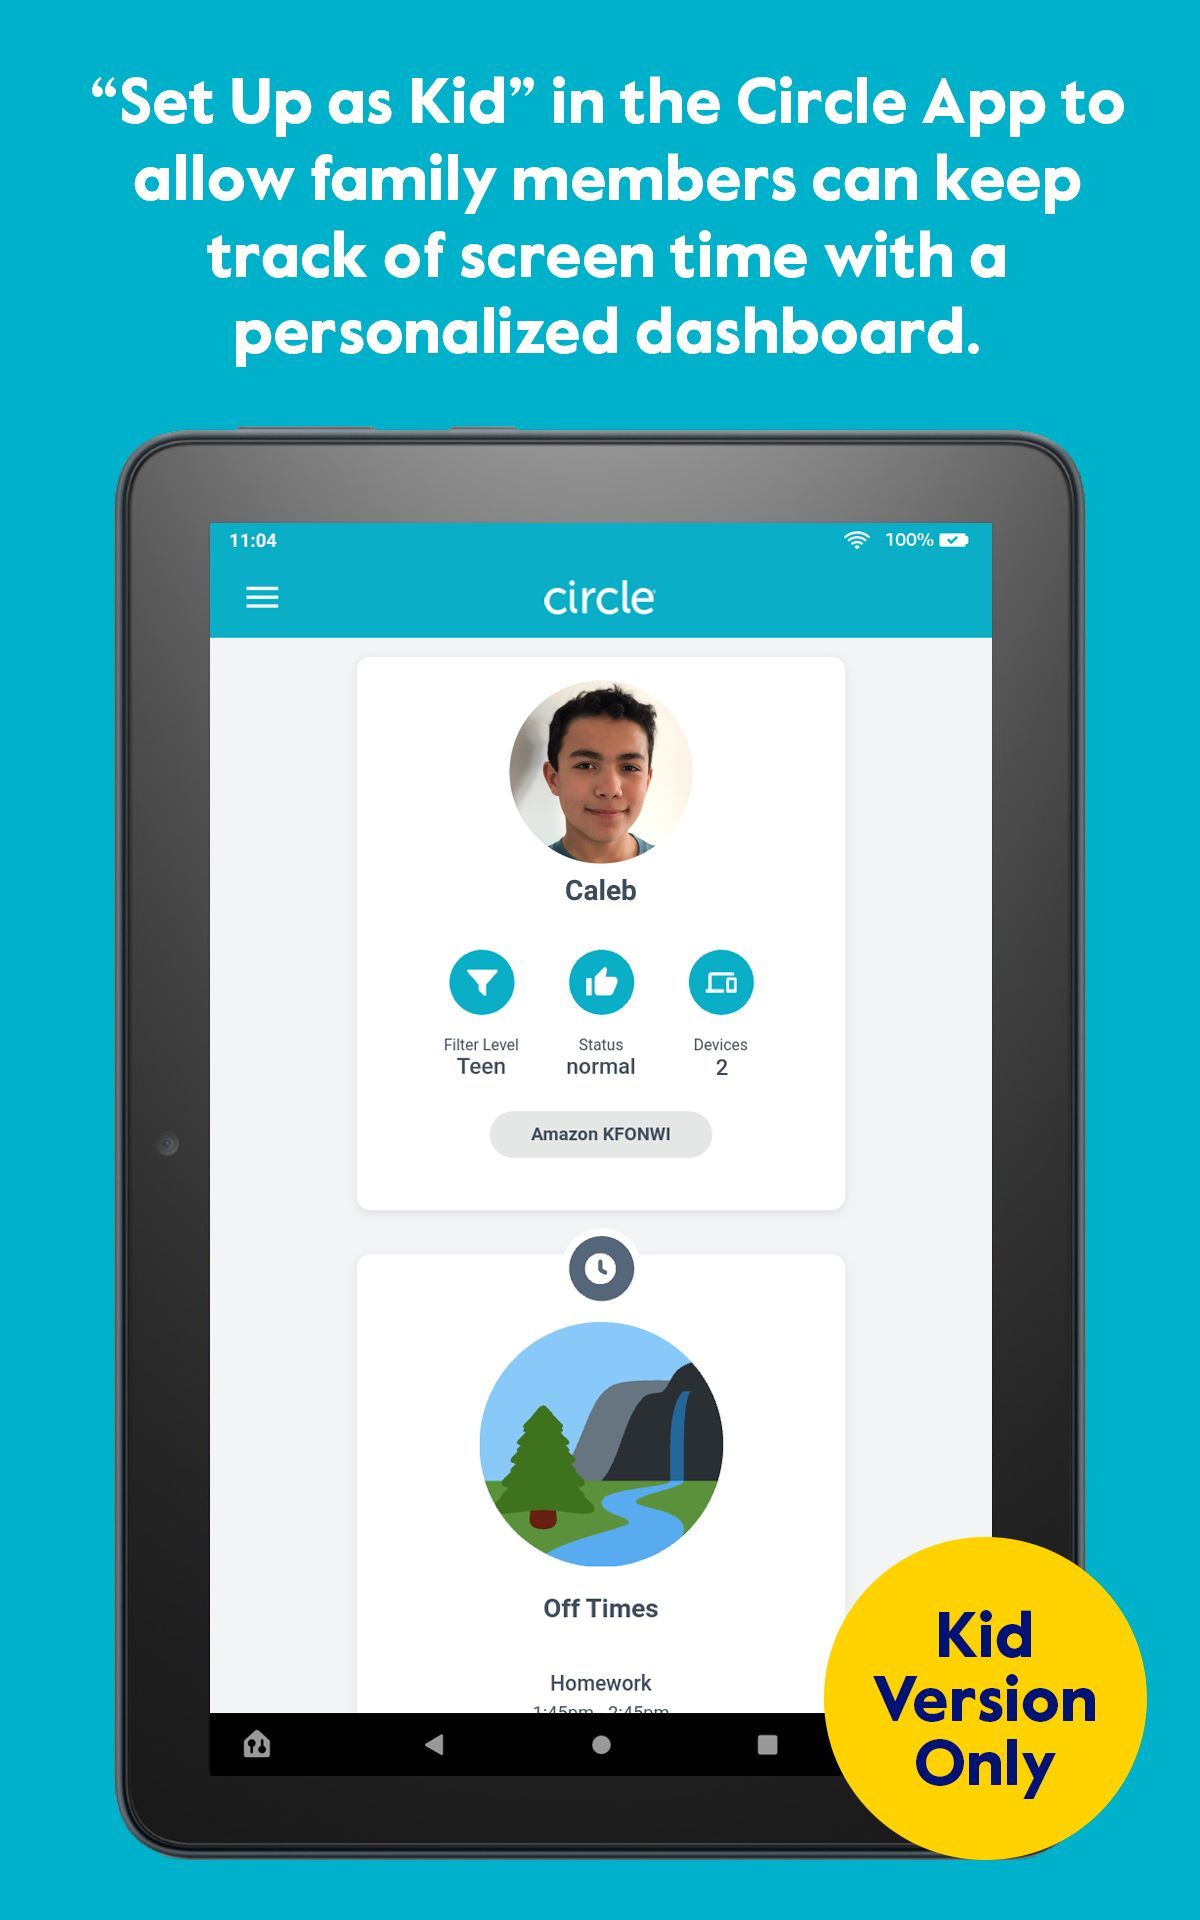 Circle Parental Controls App